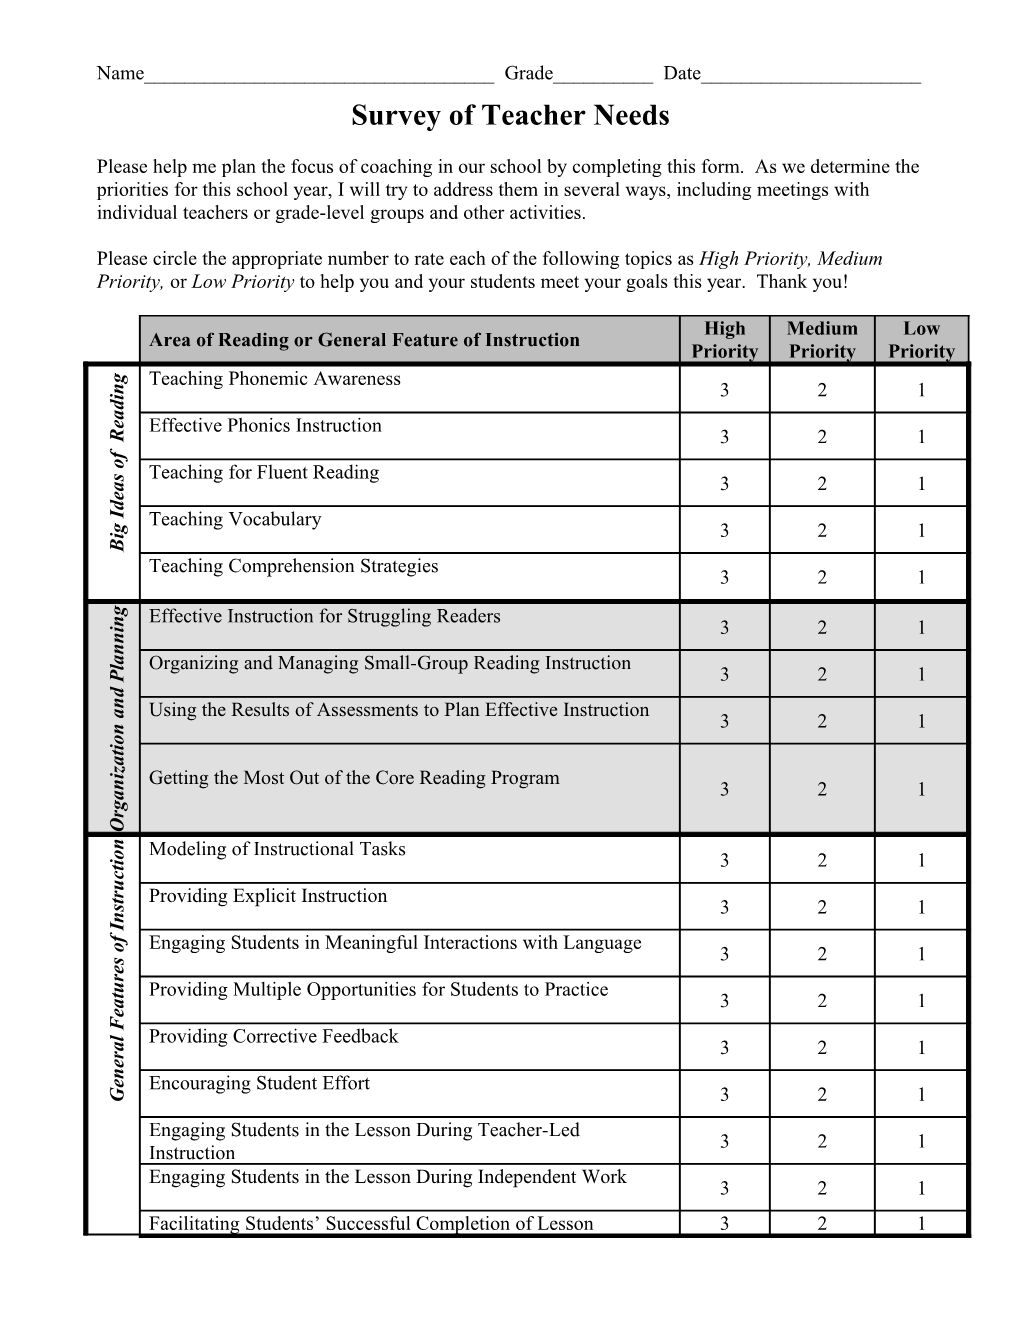 Survey of Teacher Priorities